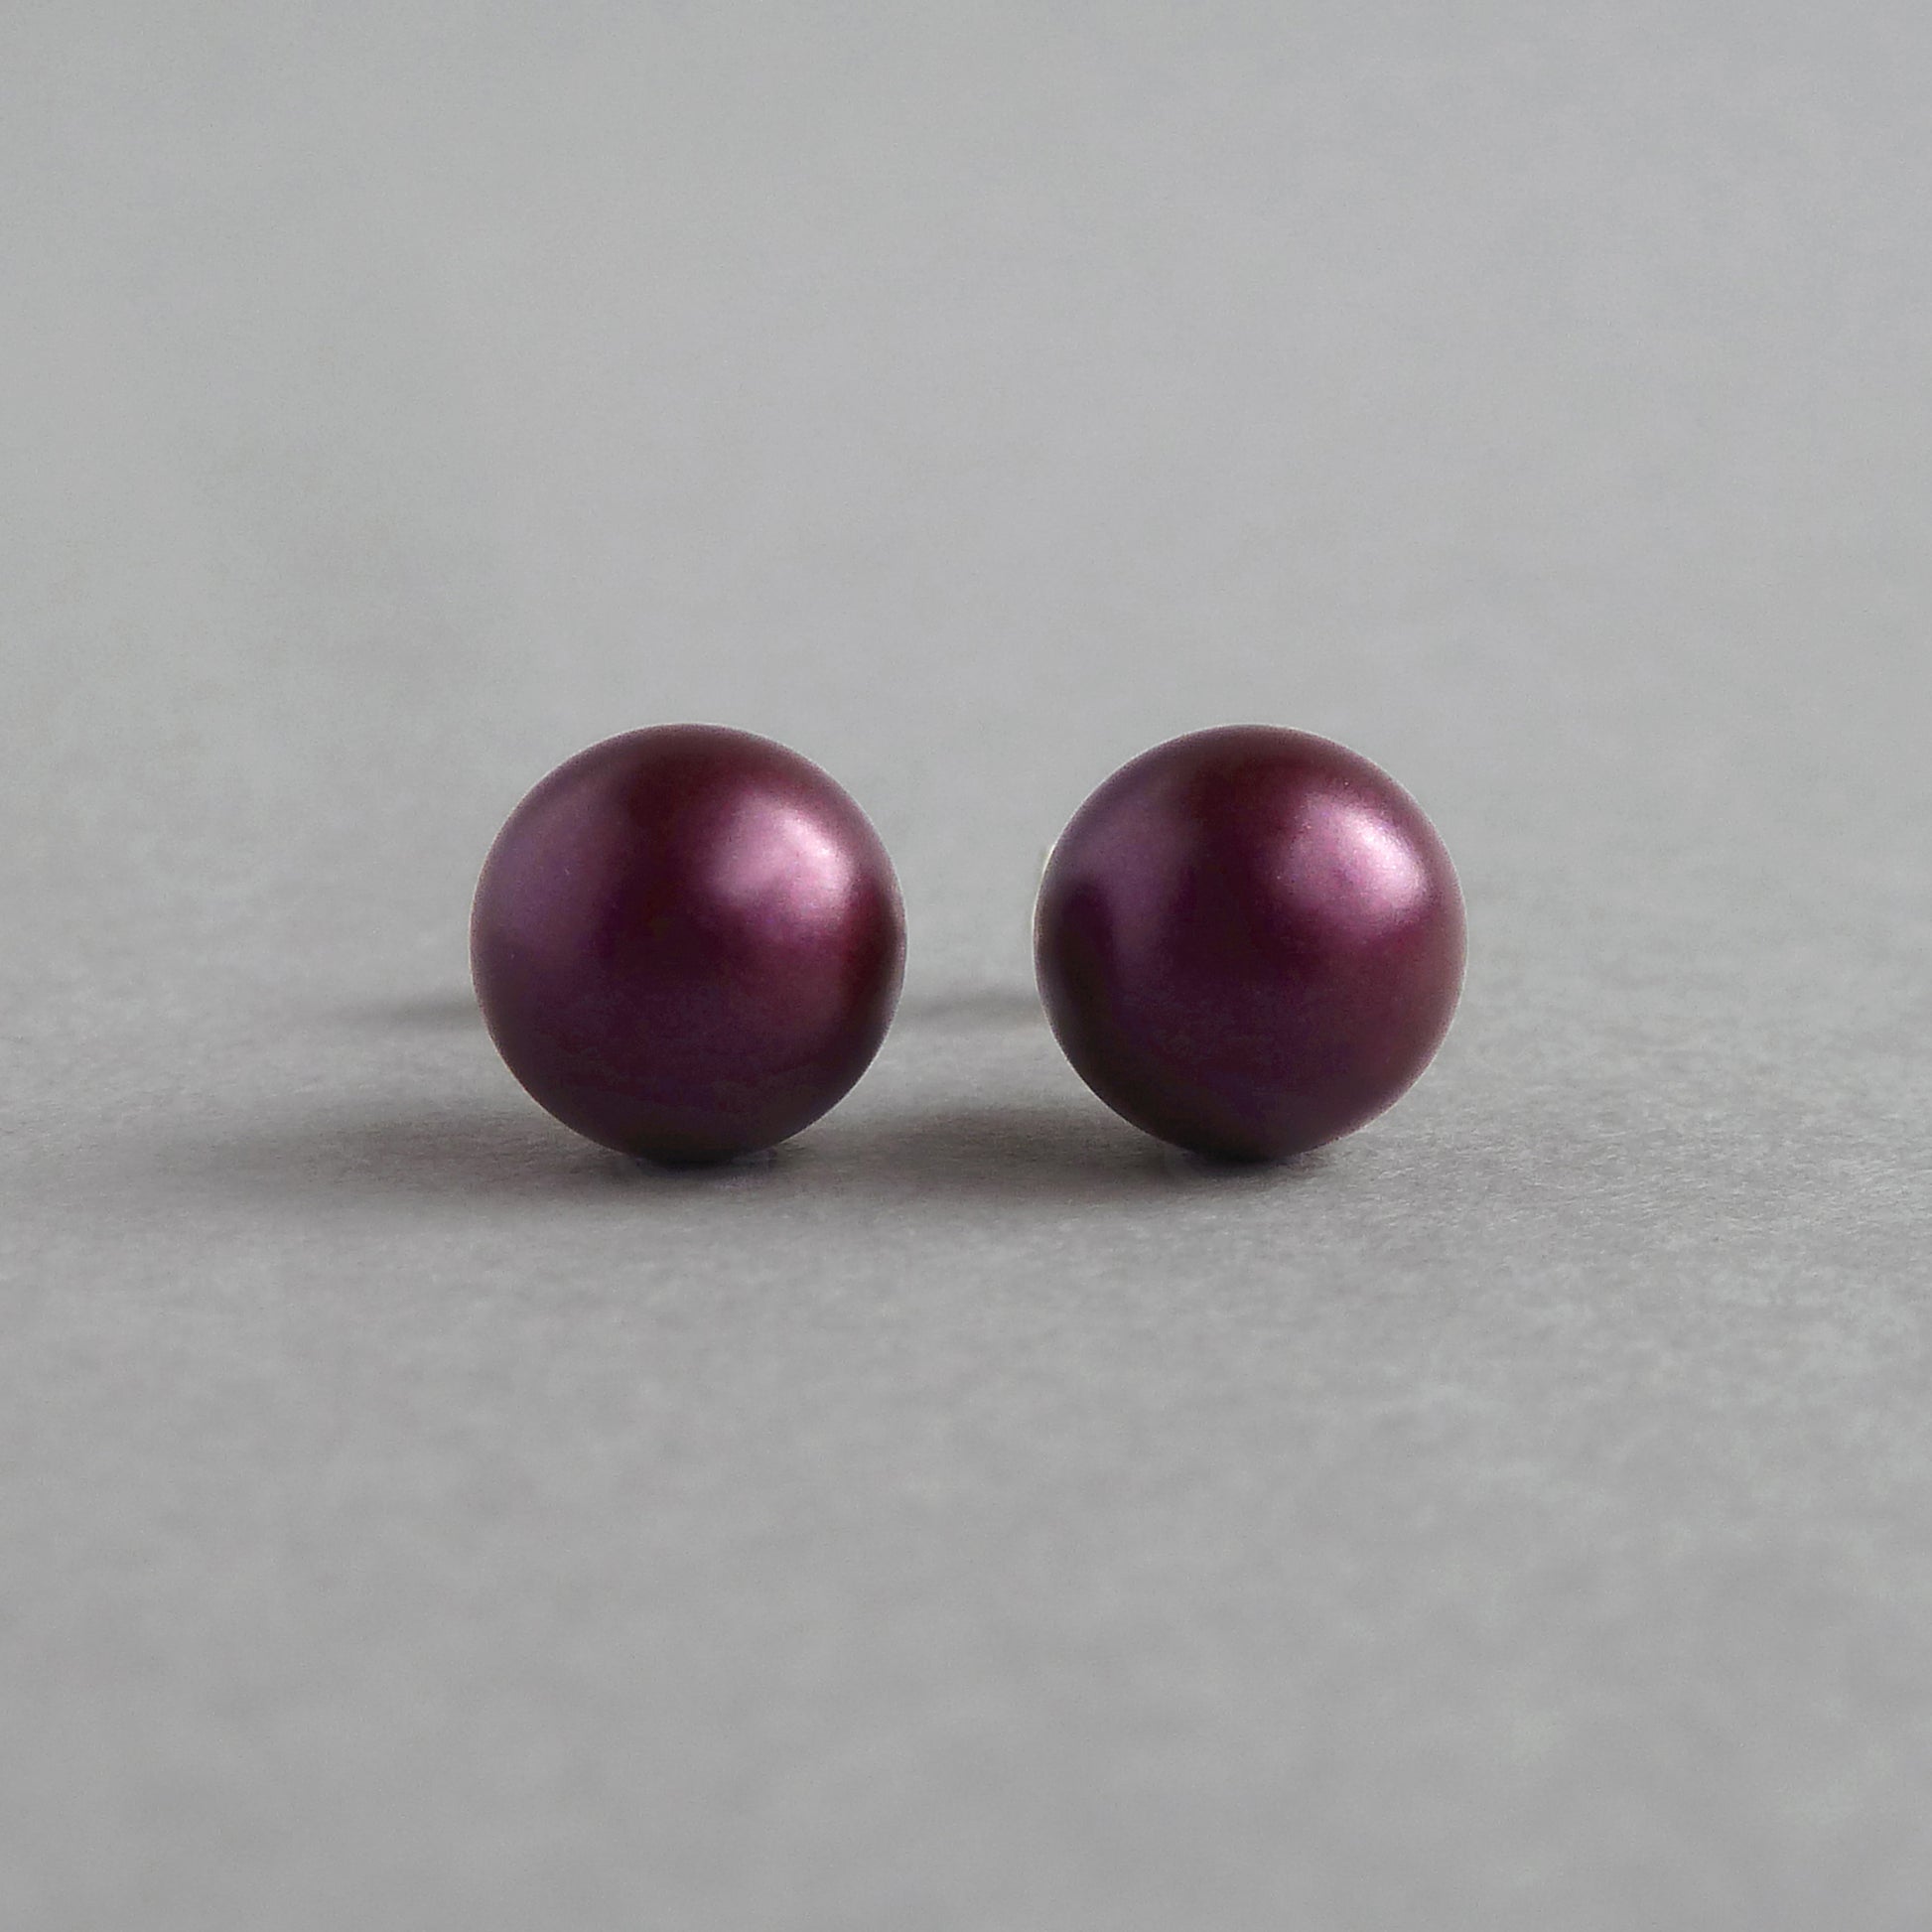 8mm plum stud earrings